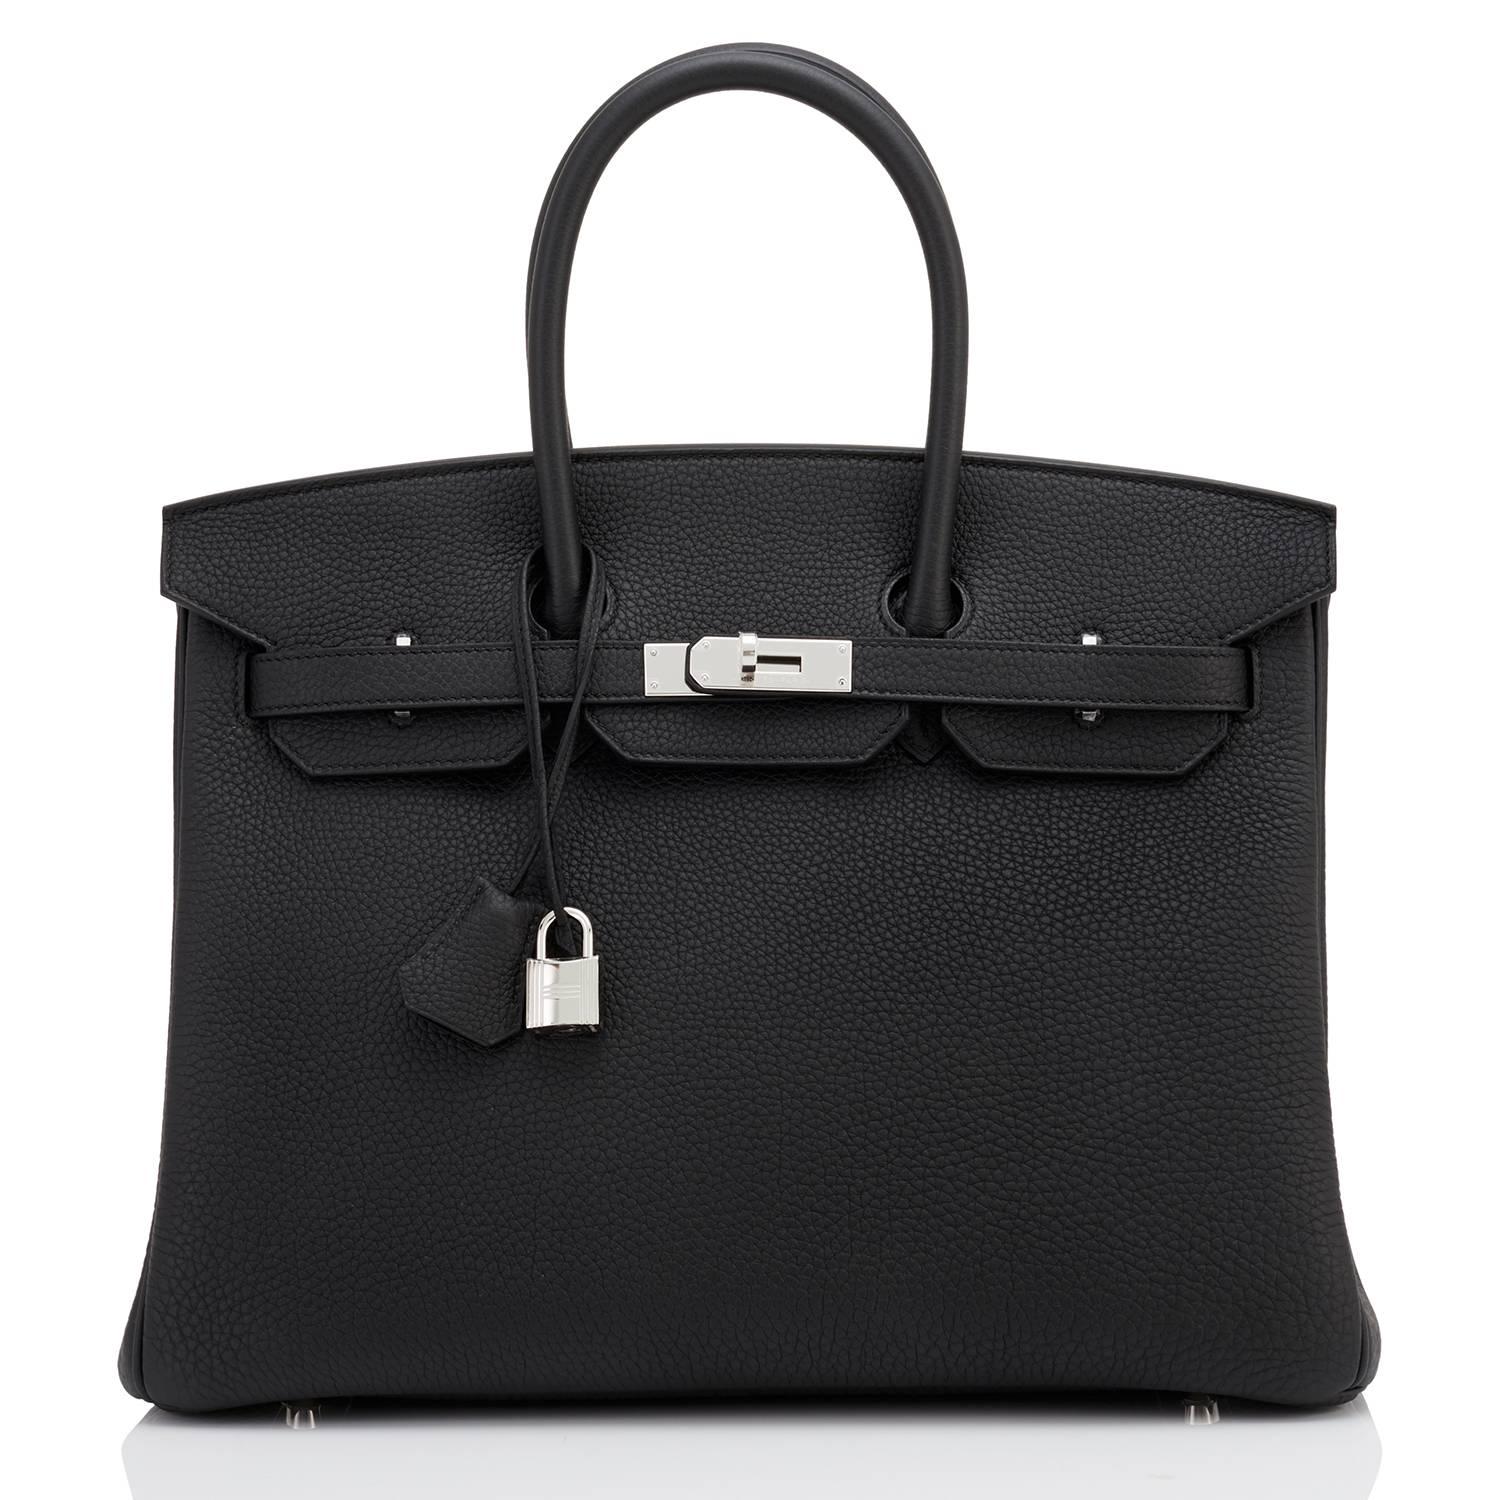 Women's or Men's Hermes Birkin 35cm Black Togo Palladium Hardware Bag NEW